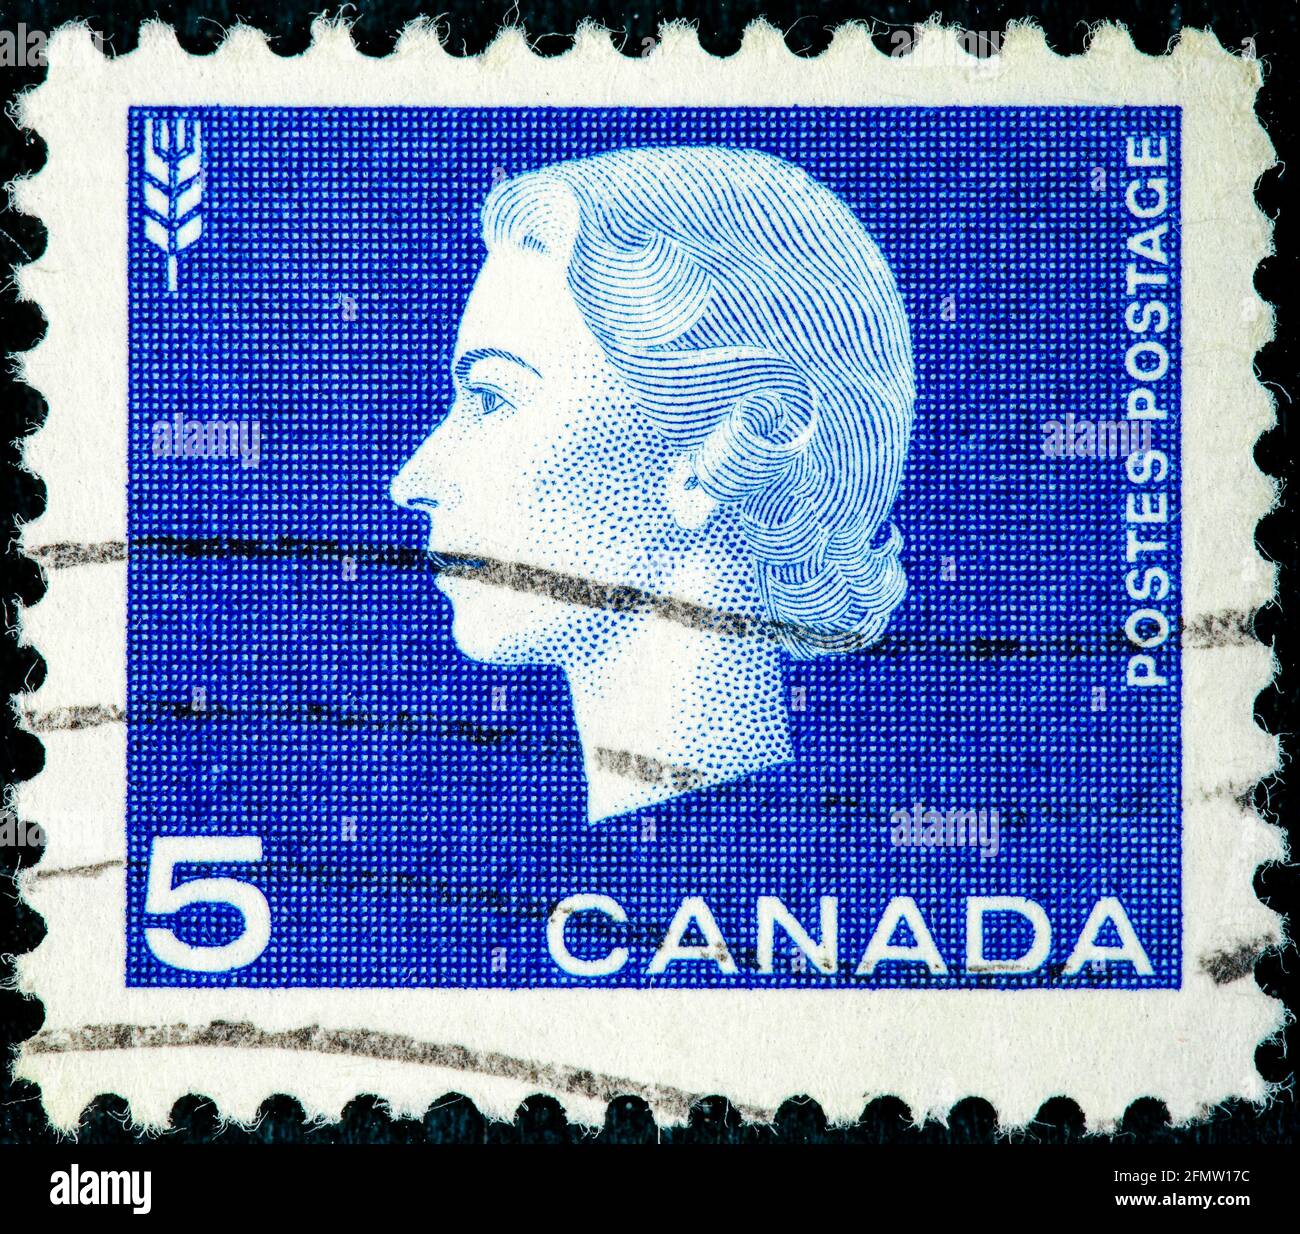 Canada - vers 1962 : un timbre postal imprimé au CANADA montre un portrait de la reine Elizabeth II de la série « Reine Elizabeth II » vers 1962 Banque D'Images